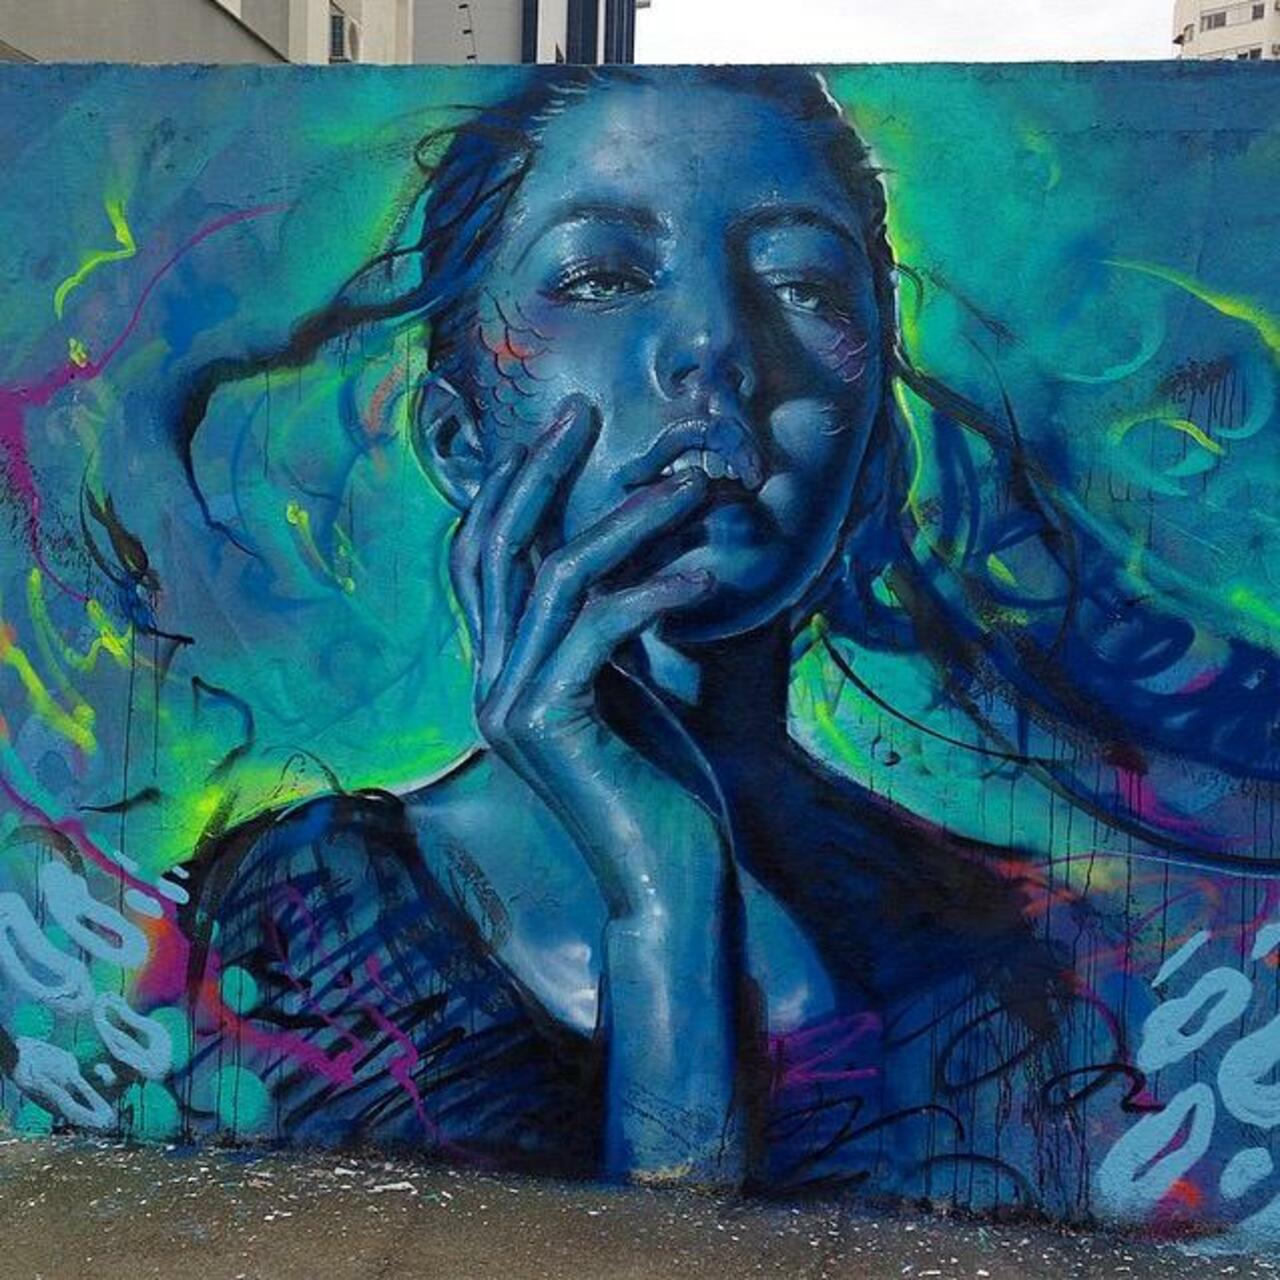 Thiago Valdi new Street Art piece titled 'Day Dreamer'

#art #mural #graffiti #streetart http://t.co/3UodbQm48I … http://twitter.com/GoogleStreetArt/status/652604458048876544/photo/1/large?utm_source=fb&utm_medium=fb&utm_campaign=charlesjackso14&utm_content=652610531250040832